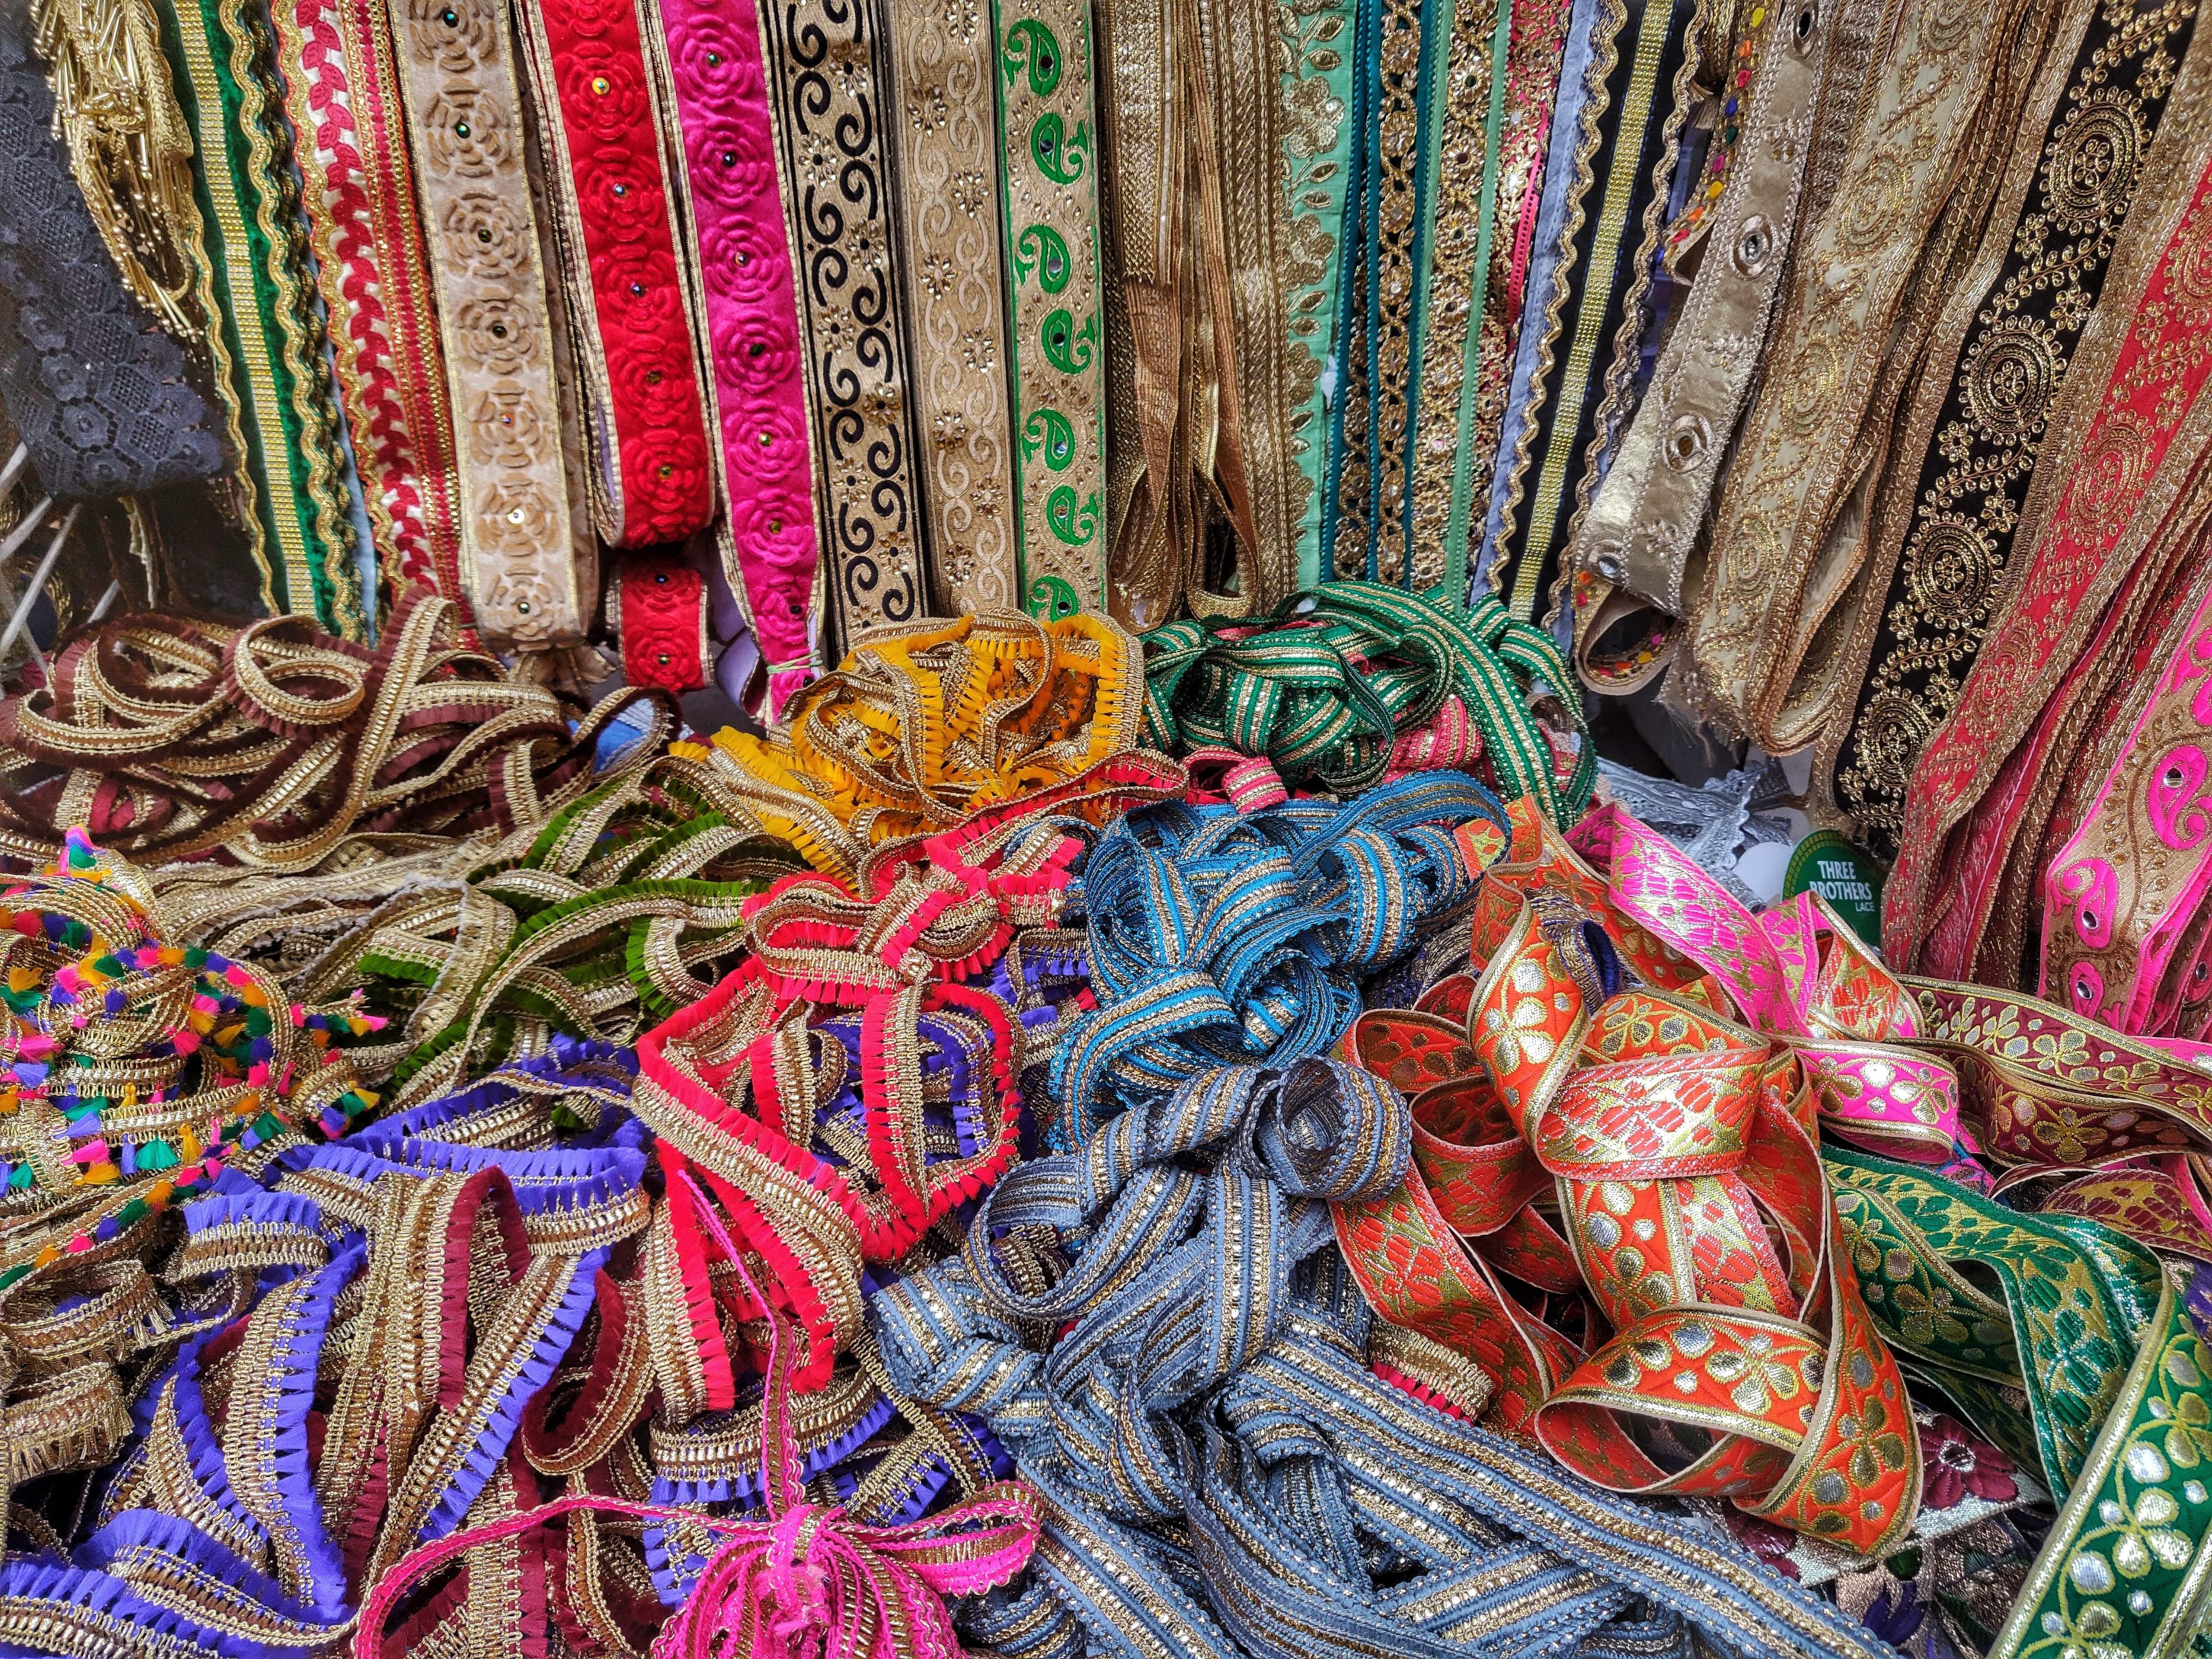 Woolen,Wool,Textile,Public space,Thread,Woven fabric,Market,Bazaar,Silk,Stole